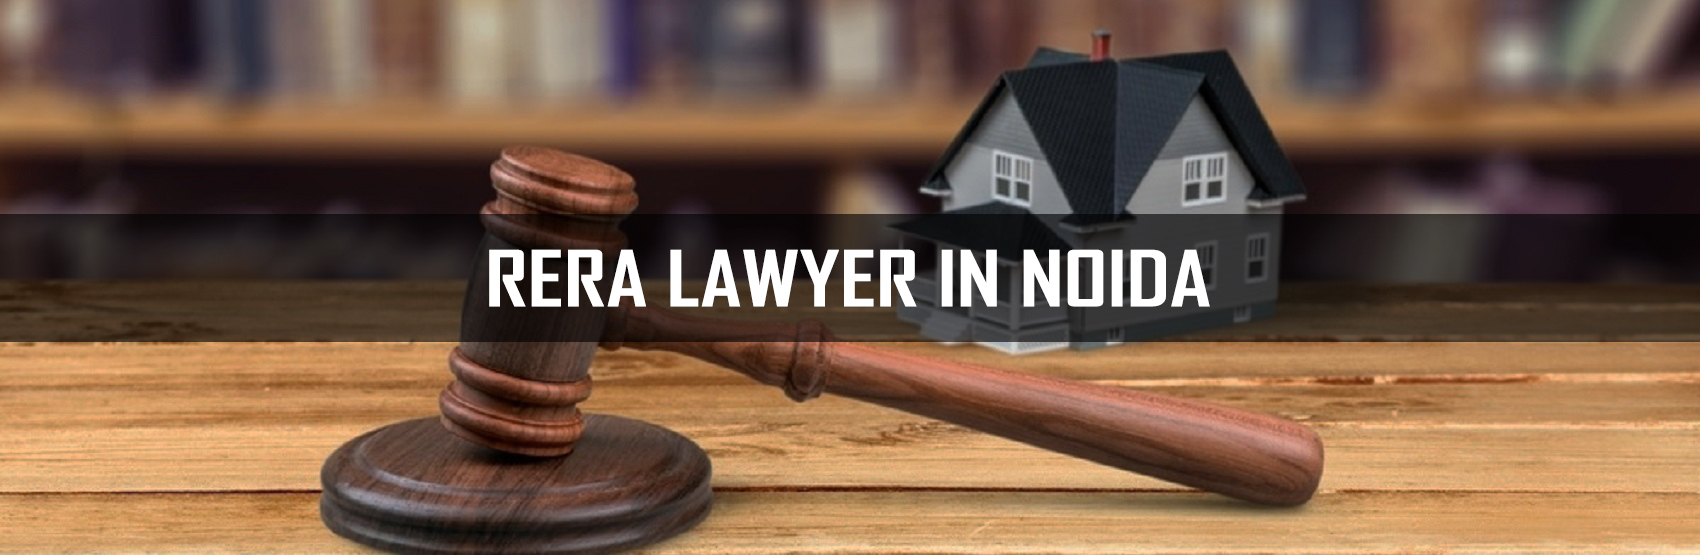 Rera Lawyer in Noida, Greater Noida, Ghaziabad, Meerut & Hapur